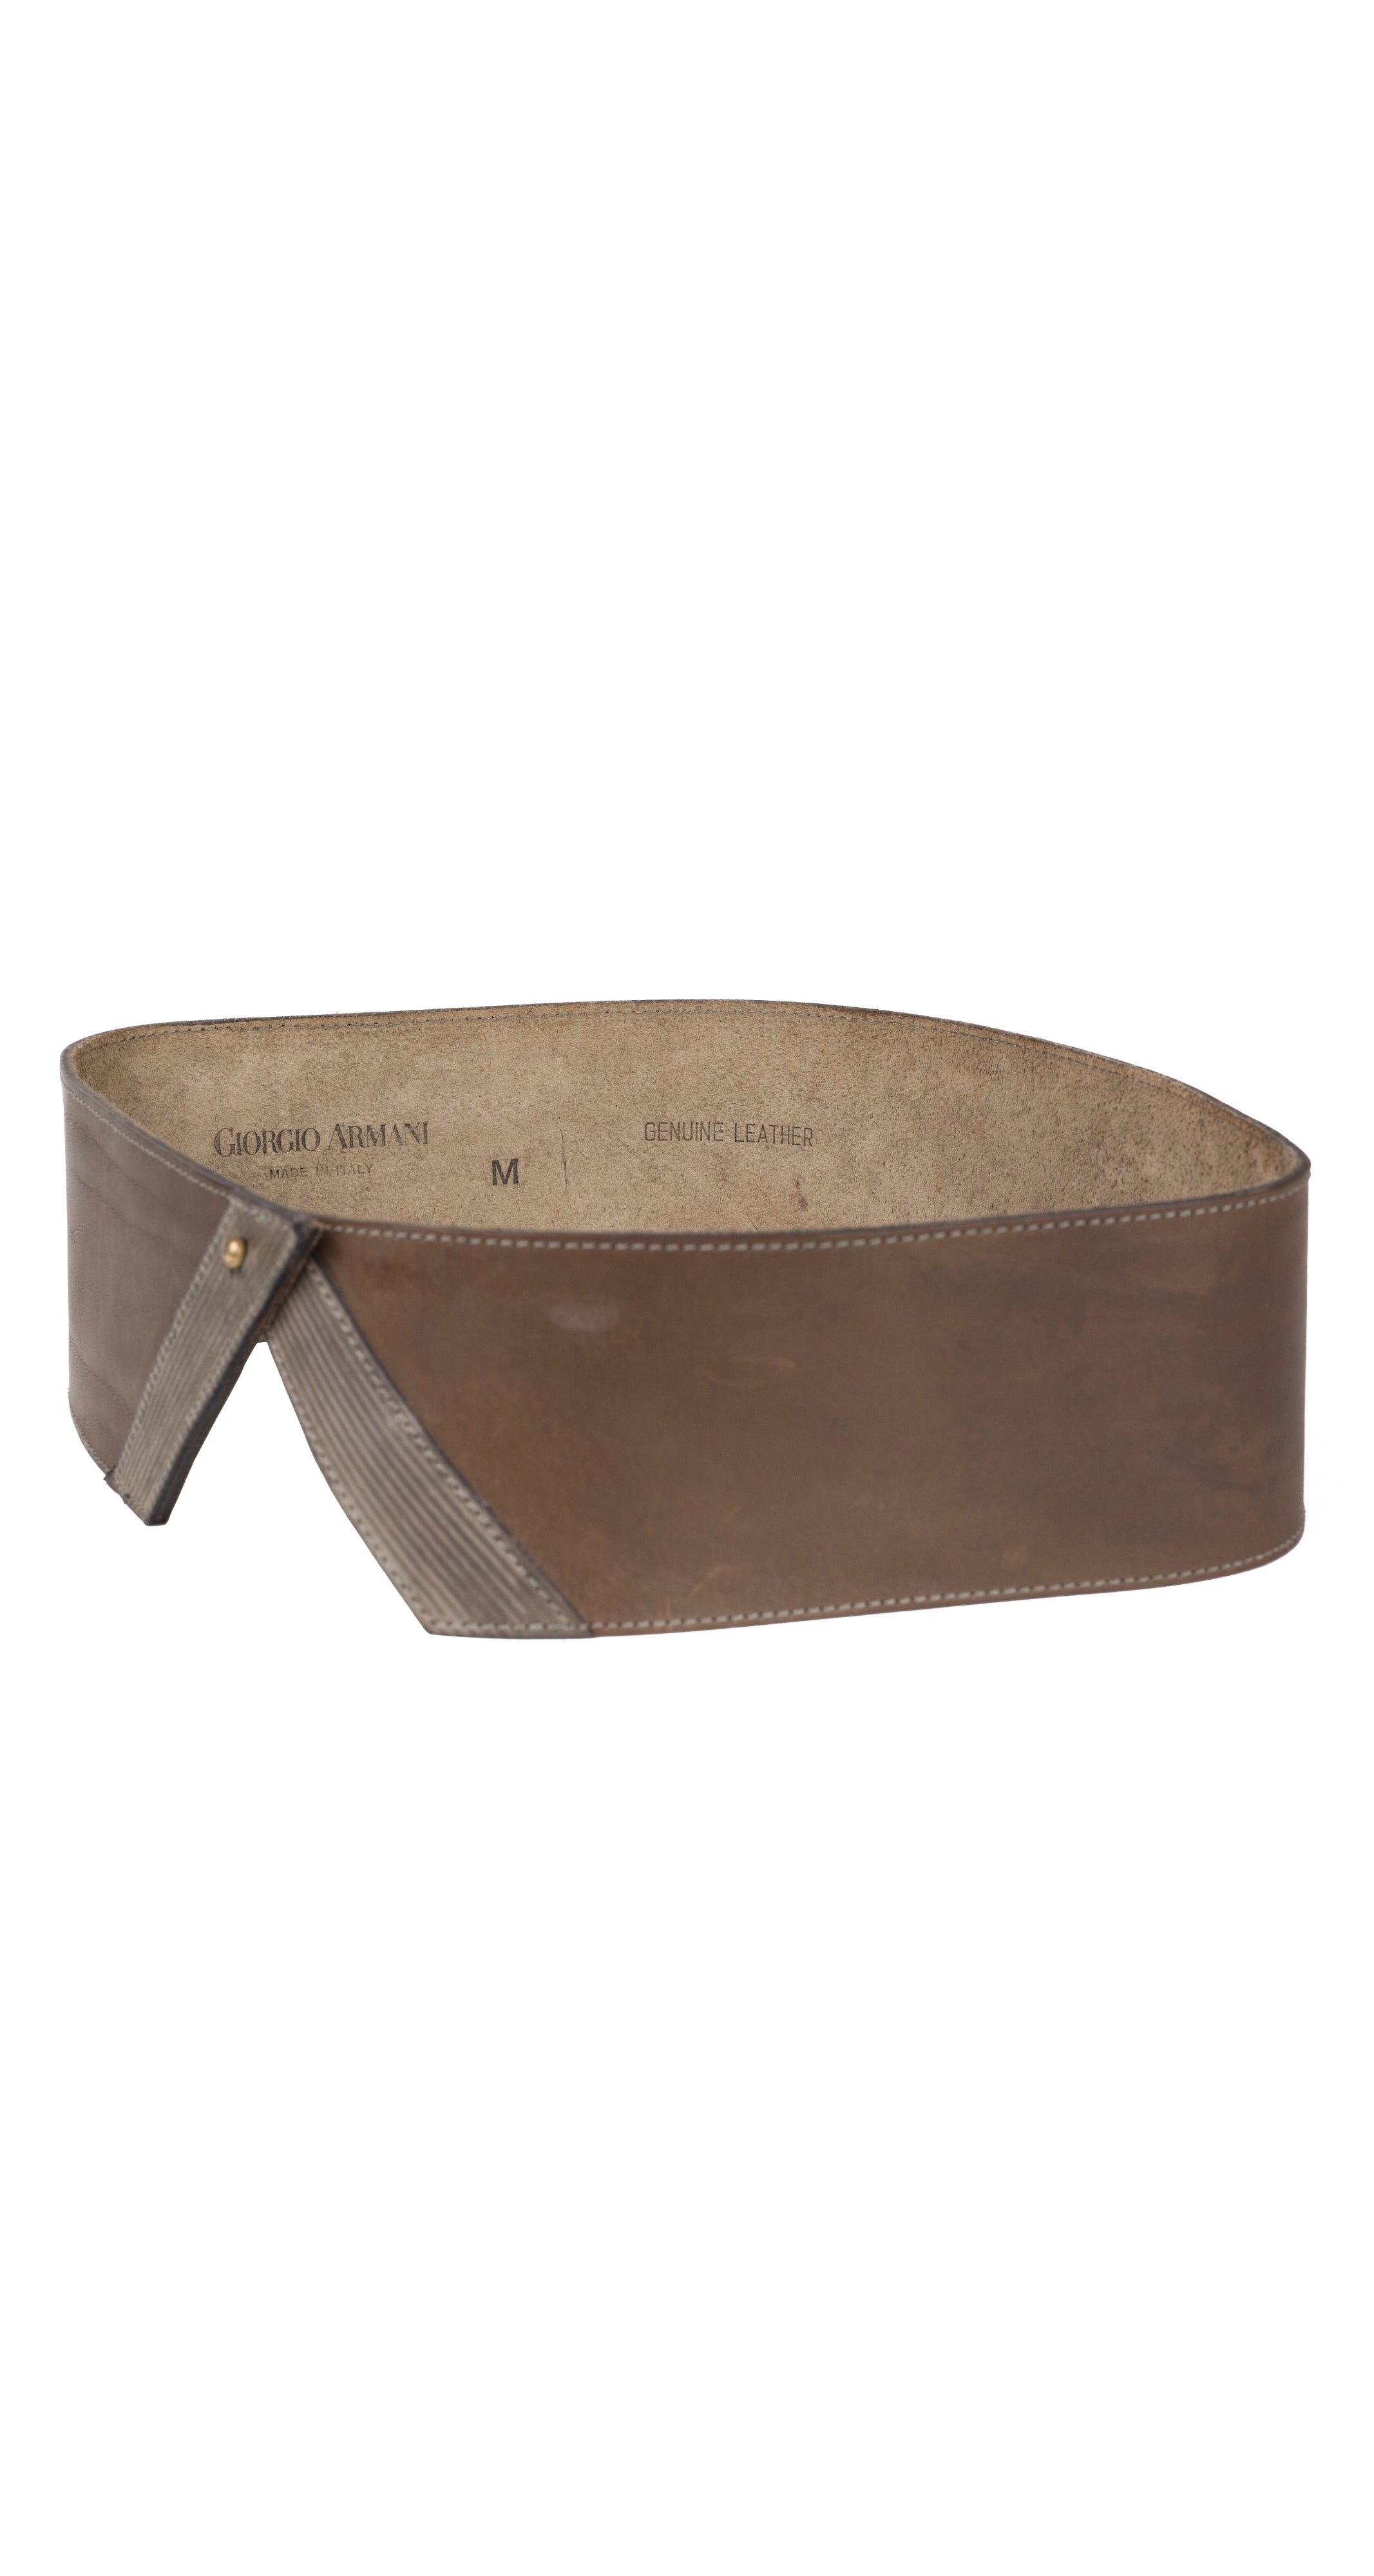 1980s Gray Leather Wide Waist Belt